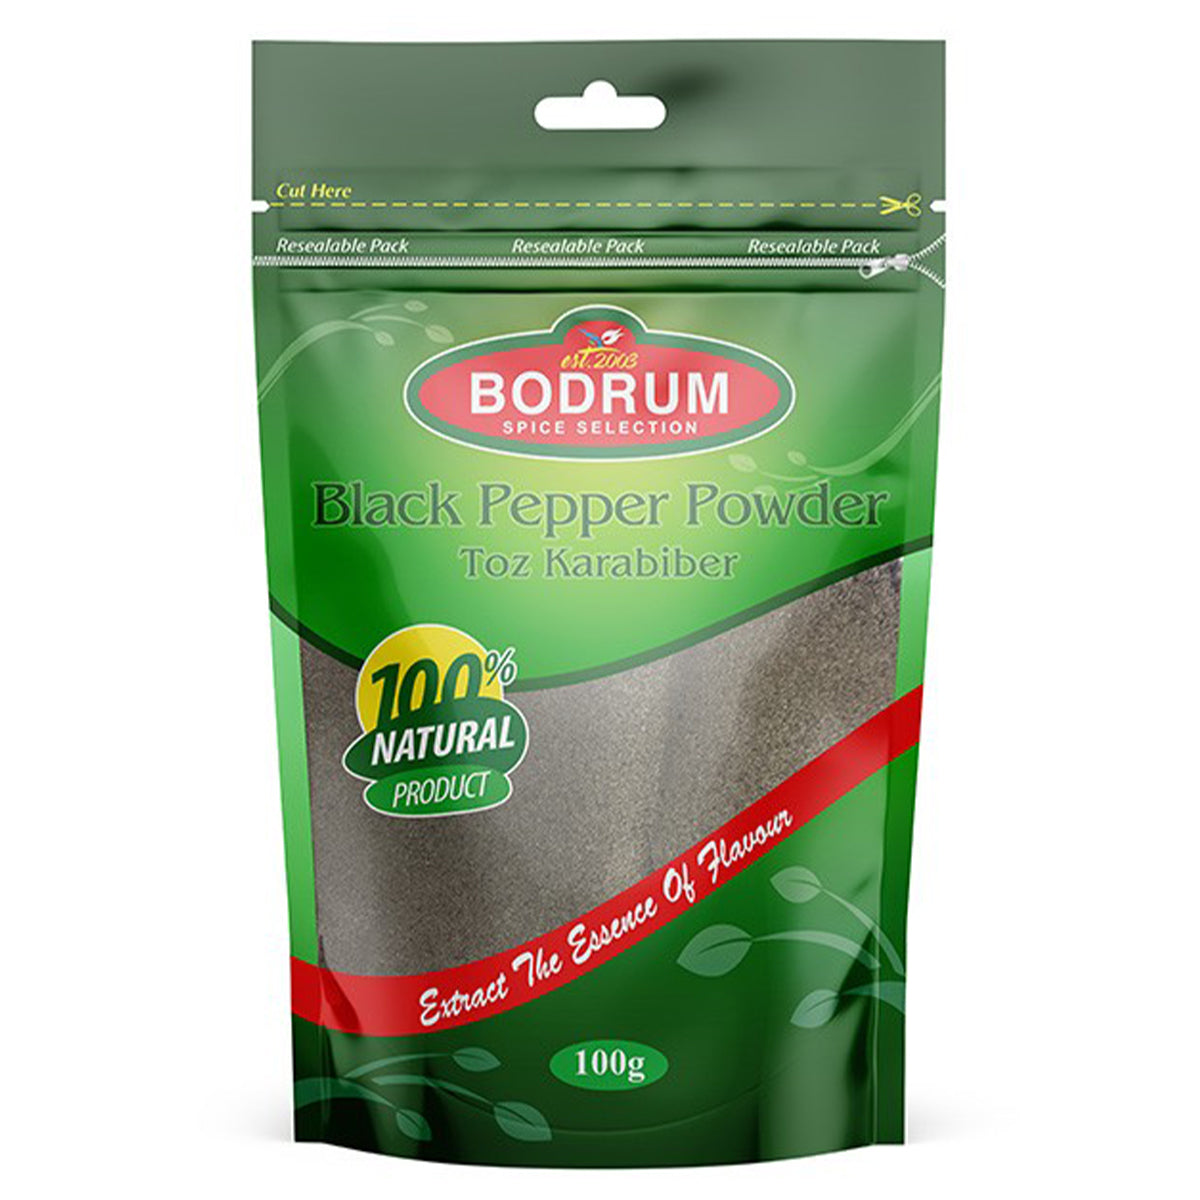 Bodrum - Black Pepper Powder - 100g is the Bodrum black pepper powder.